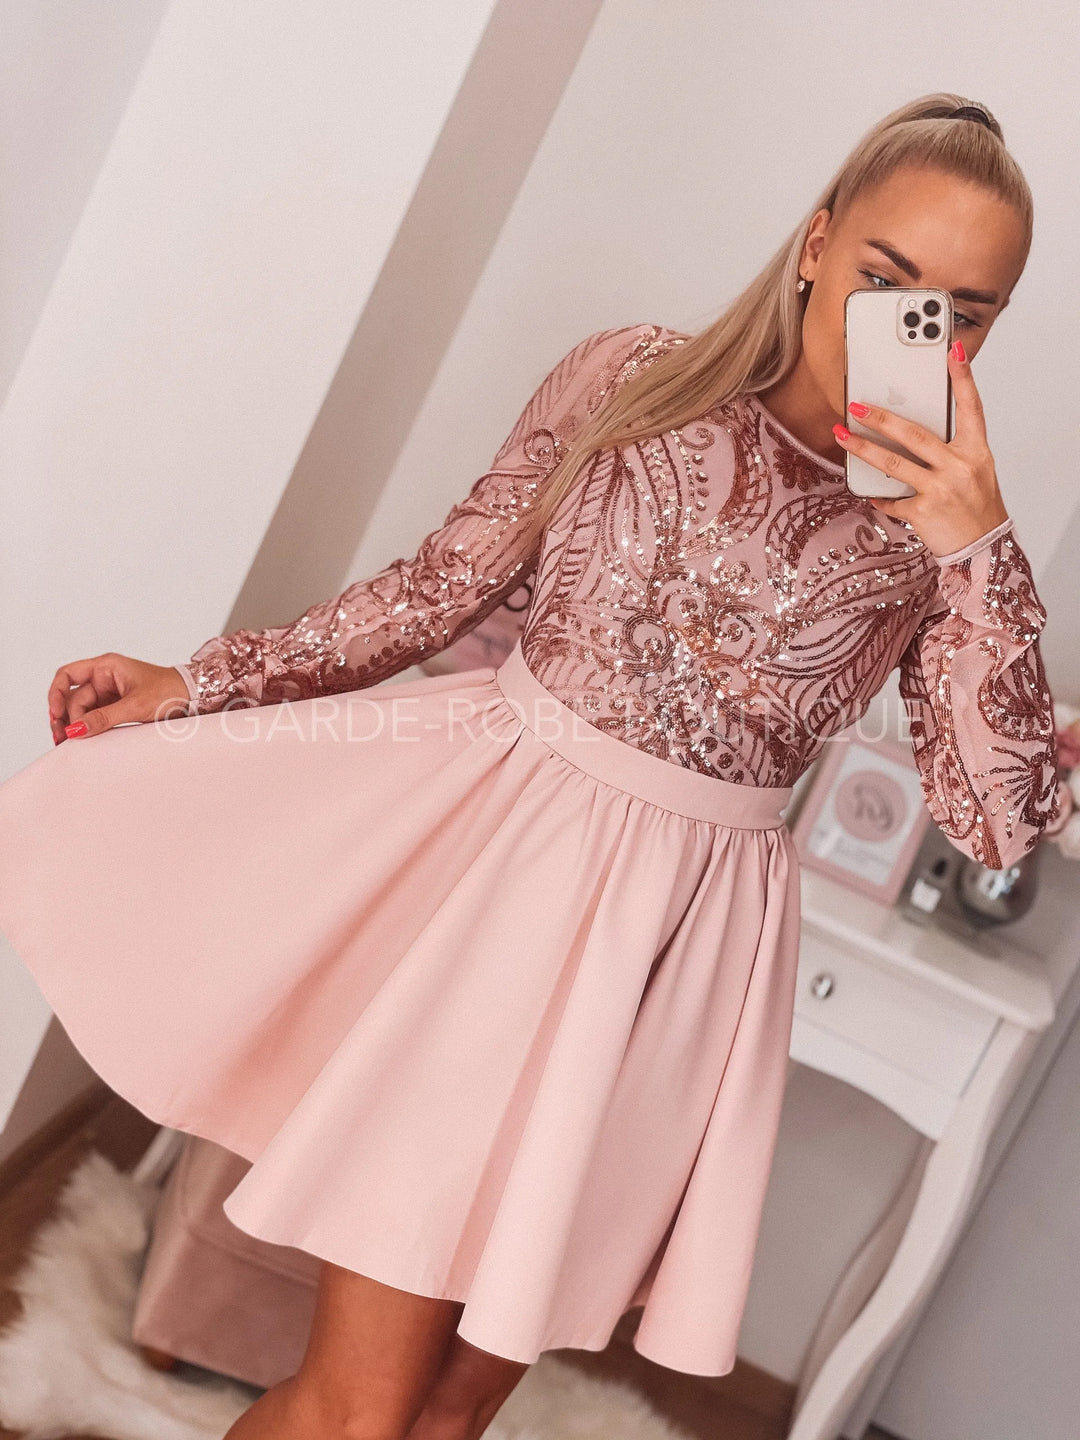 Mini dress "Pink sequin"